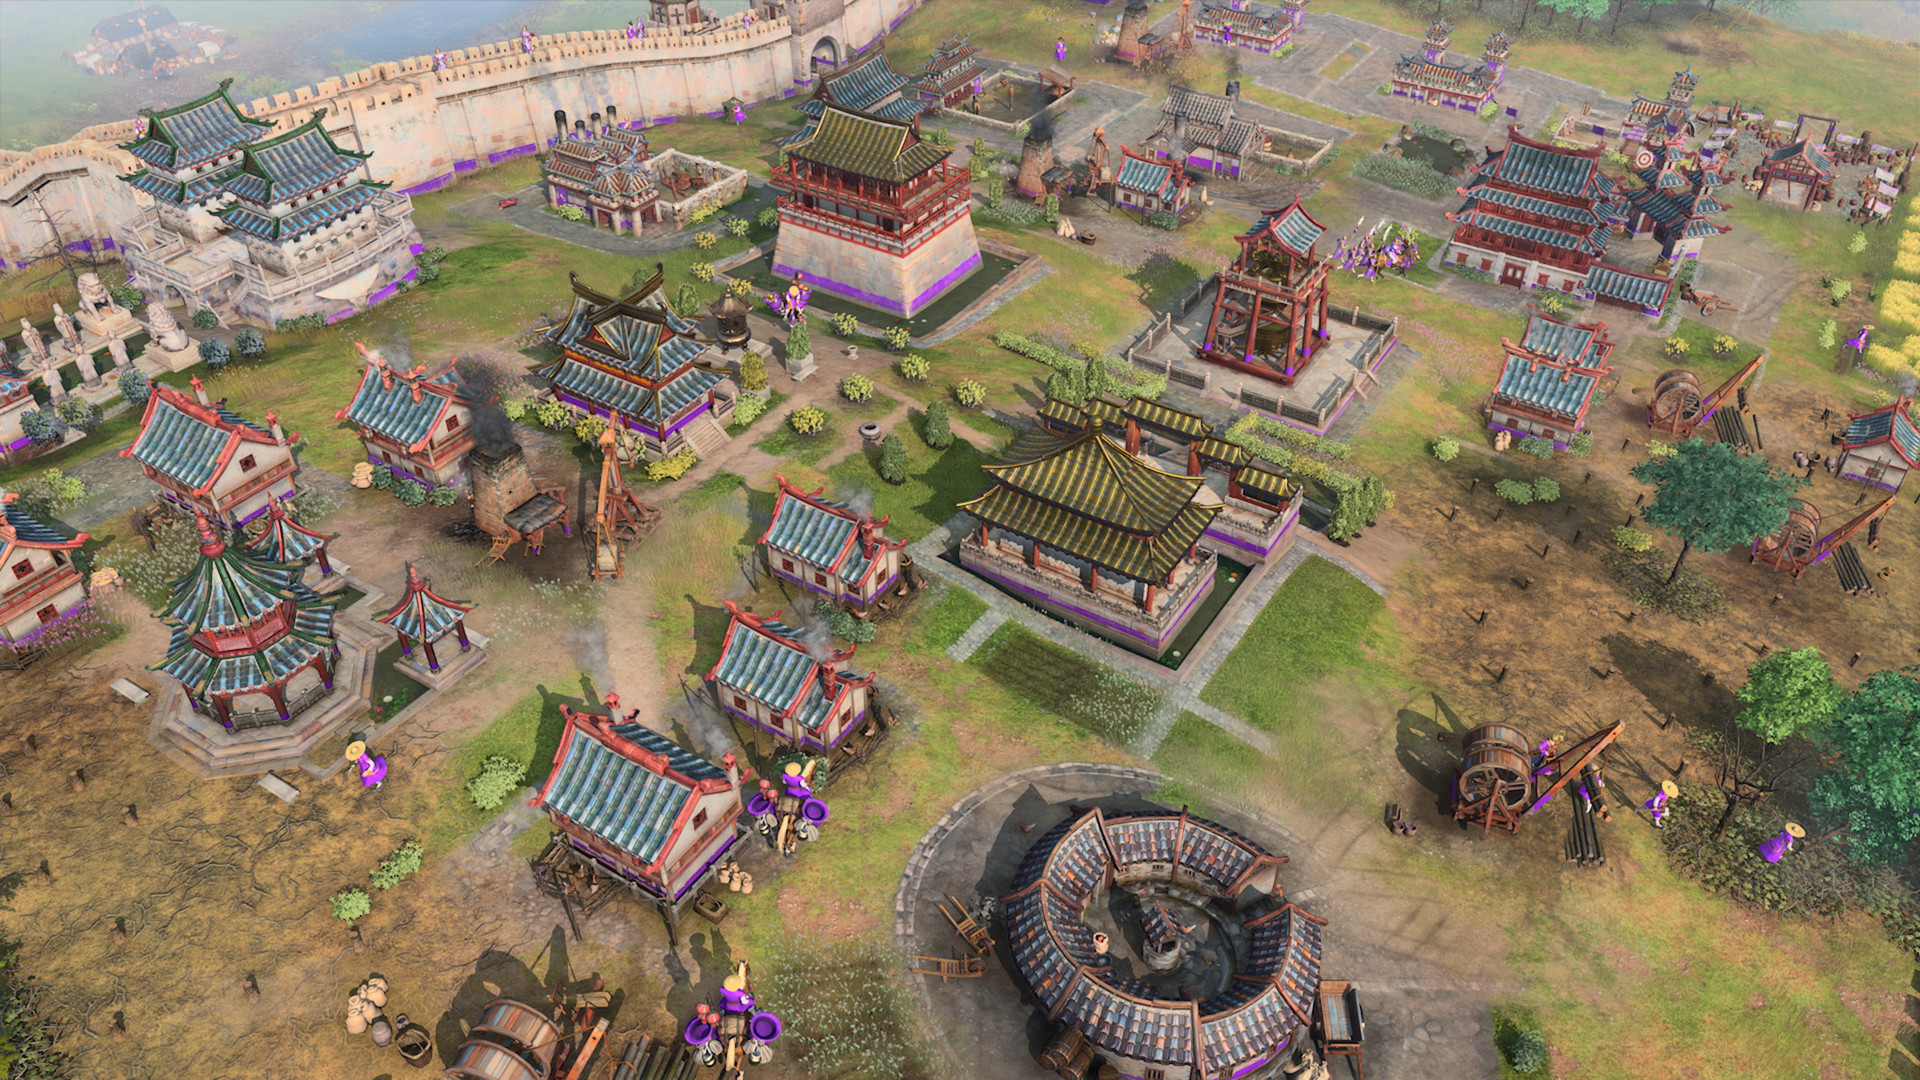 Скриншот 🔥Age of Empires III: Definitive Edition STEAM RU💳0%🔥